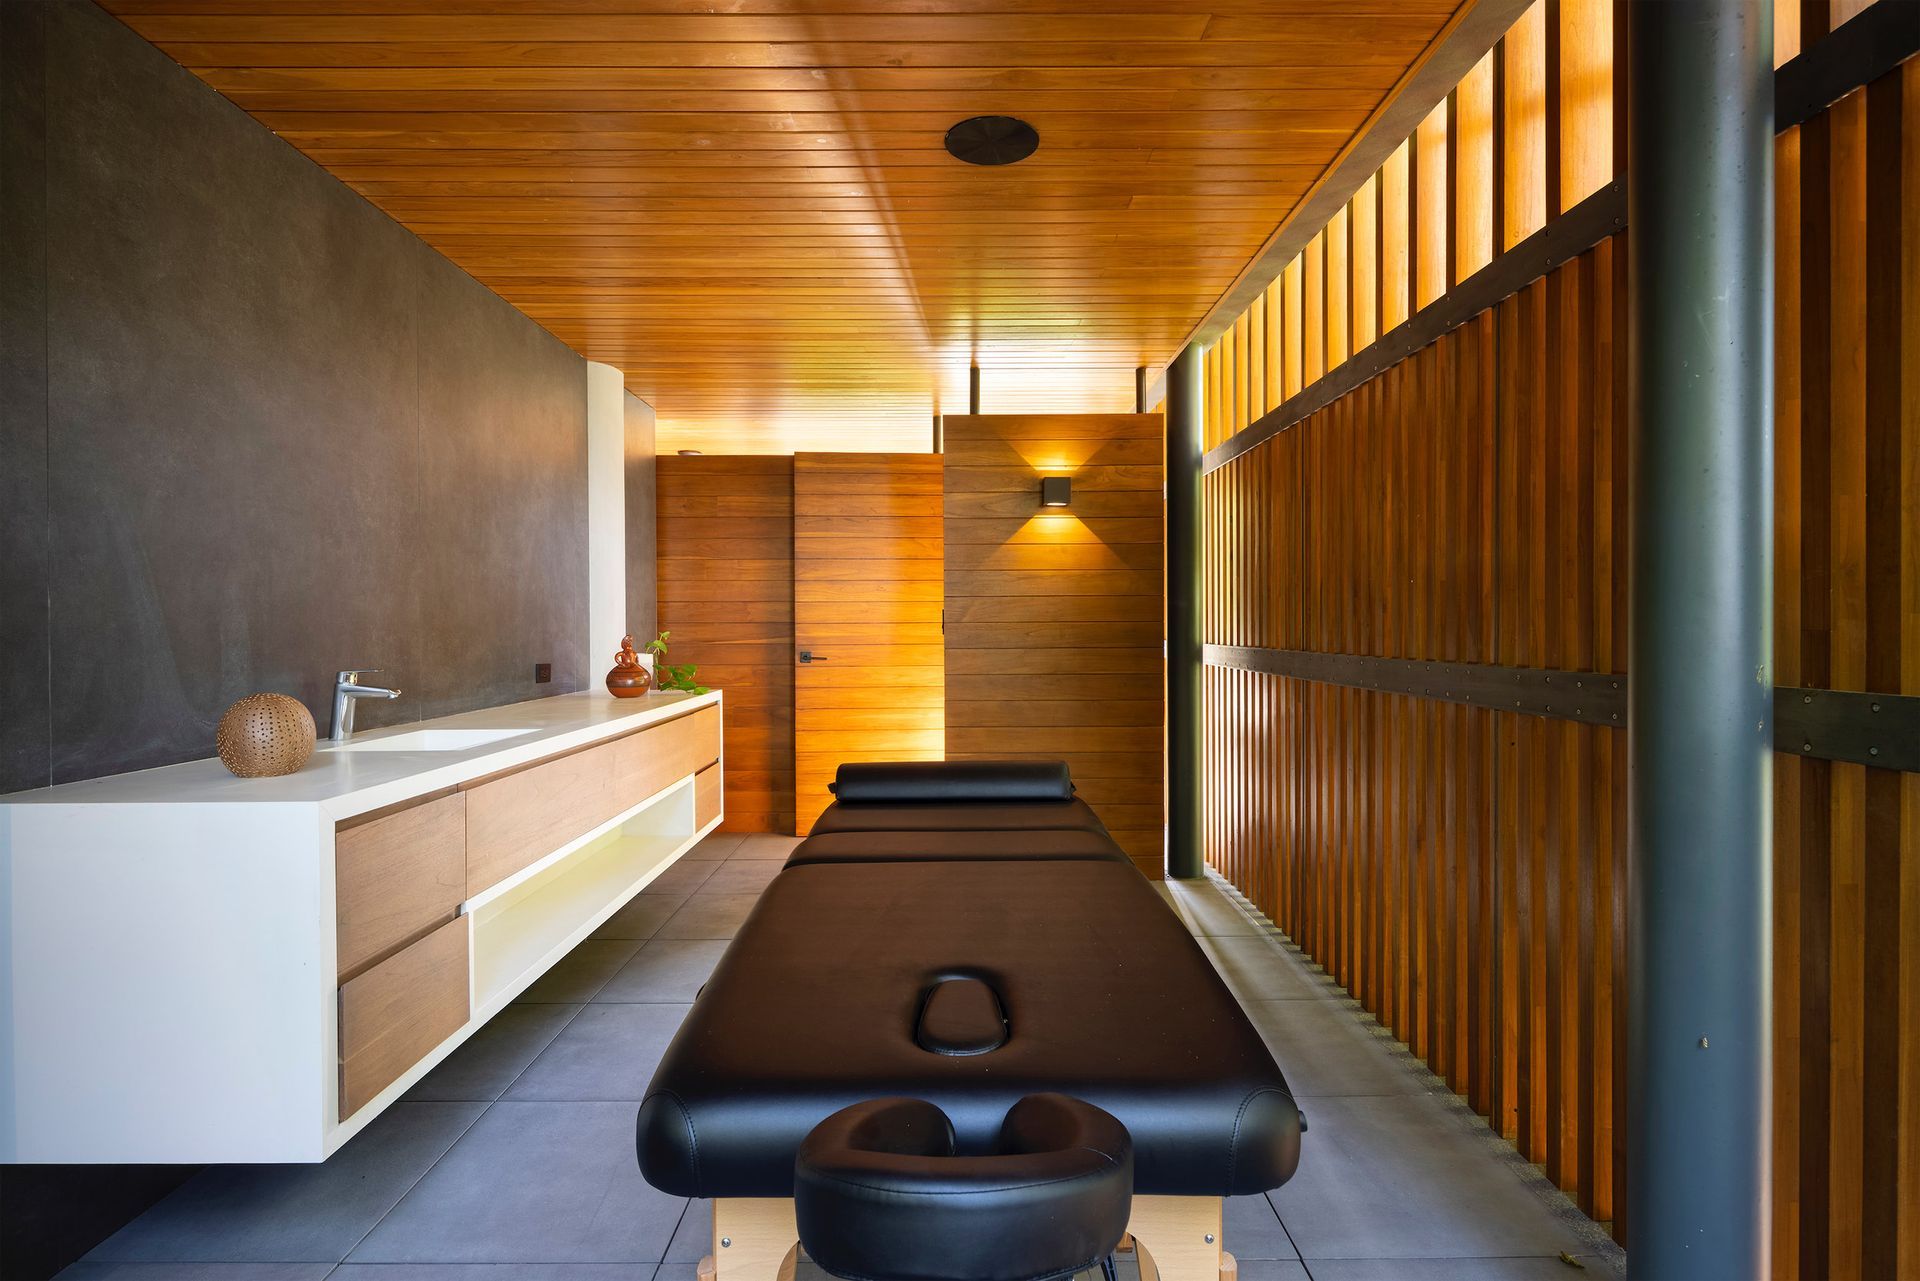 A luxury spa-like bathroom